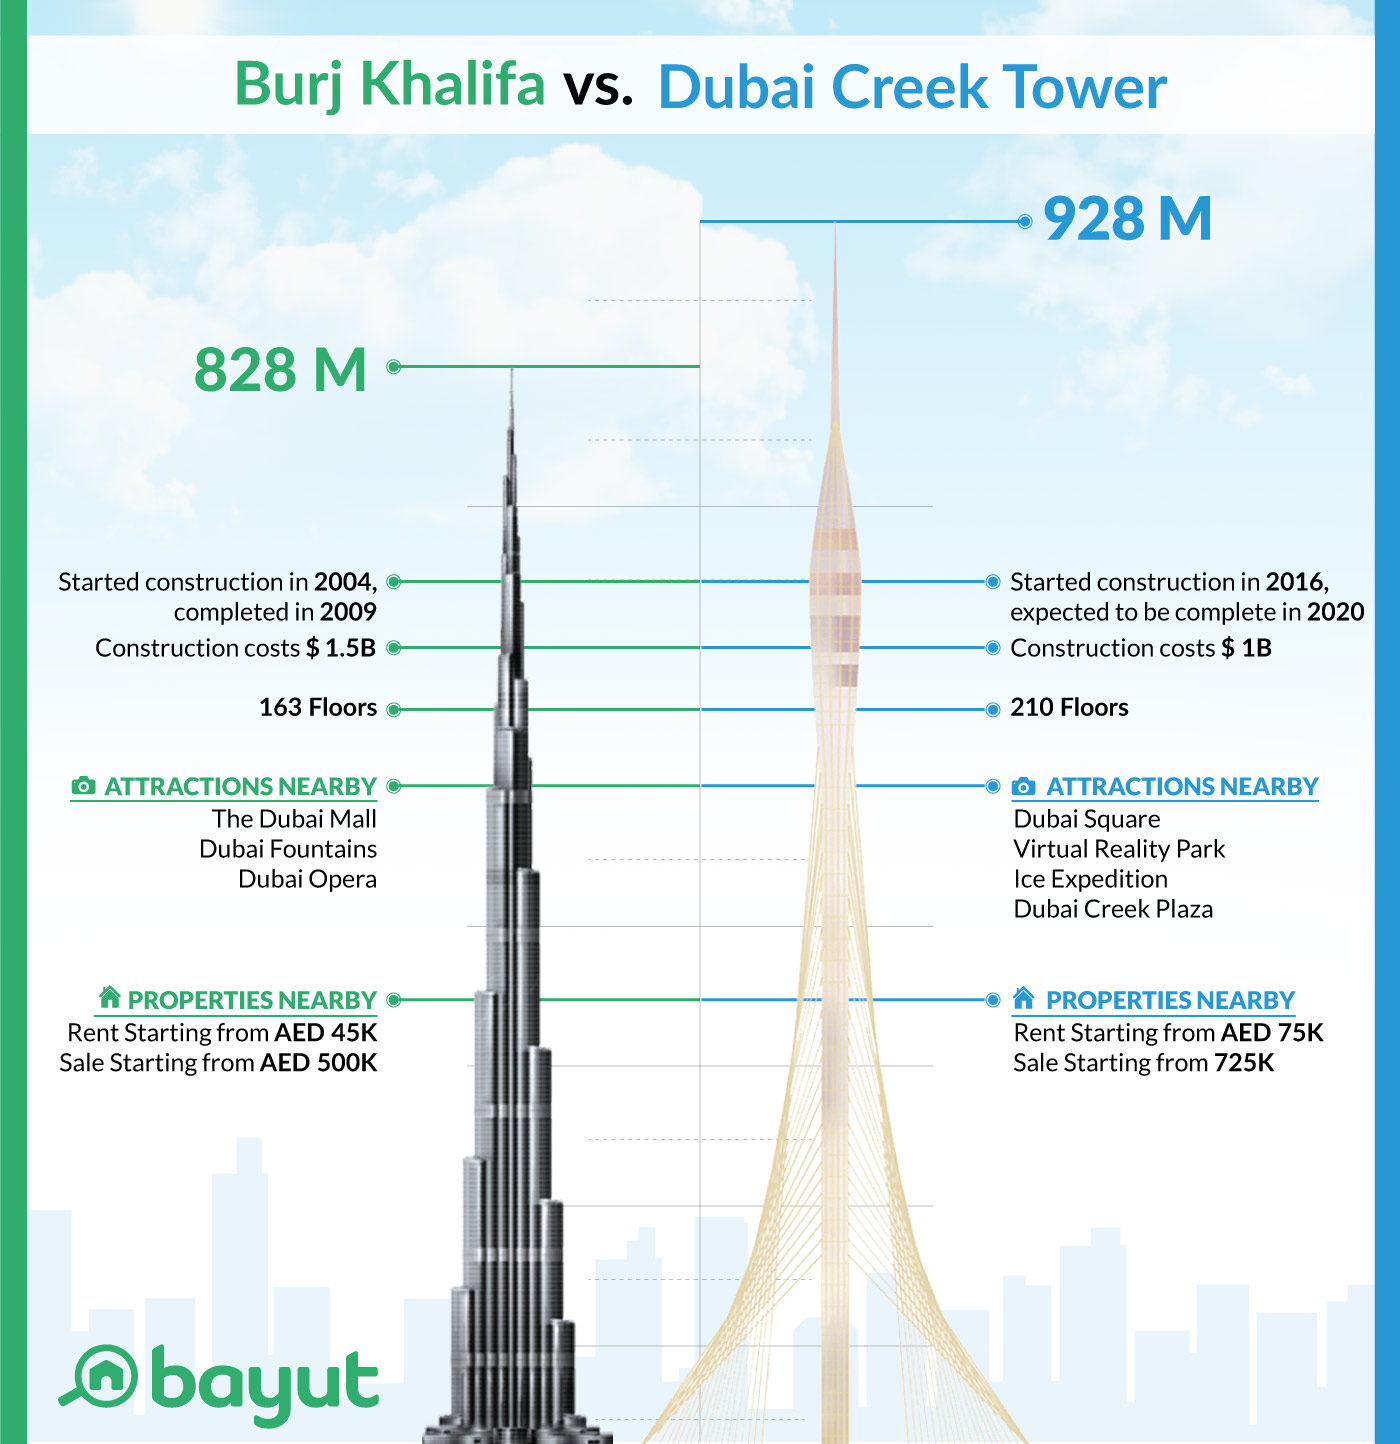 Бурдж халифа билеты сайт. Дубай крик Тауэр. Новая башня в Дубае выше Бурдж Халифа. Dubai Creek Tower высота. Высота 125 этажа Бурдж Халифа Дубай.